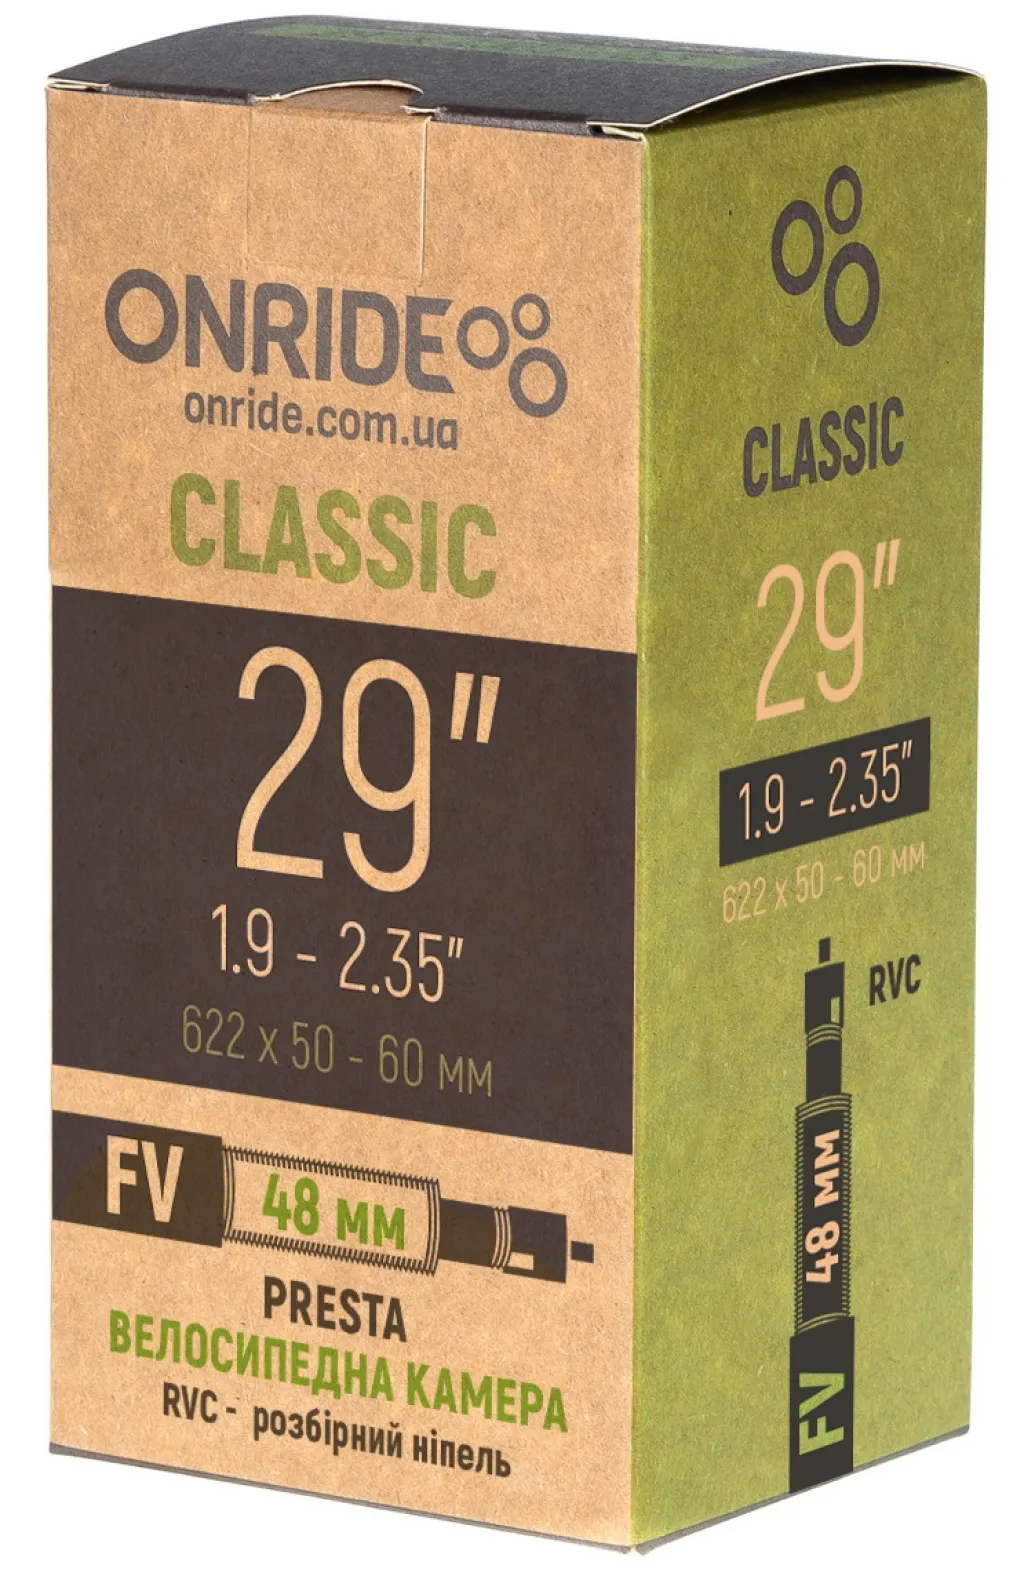 Камера ONRIDE Classic 29"x1.9-2.35" FV 48 RVC